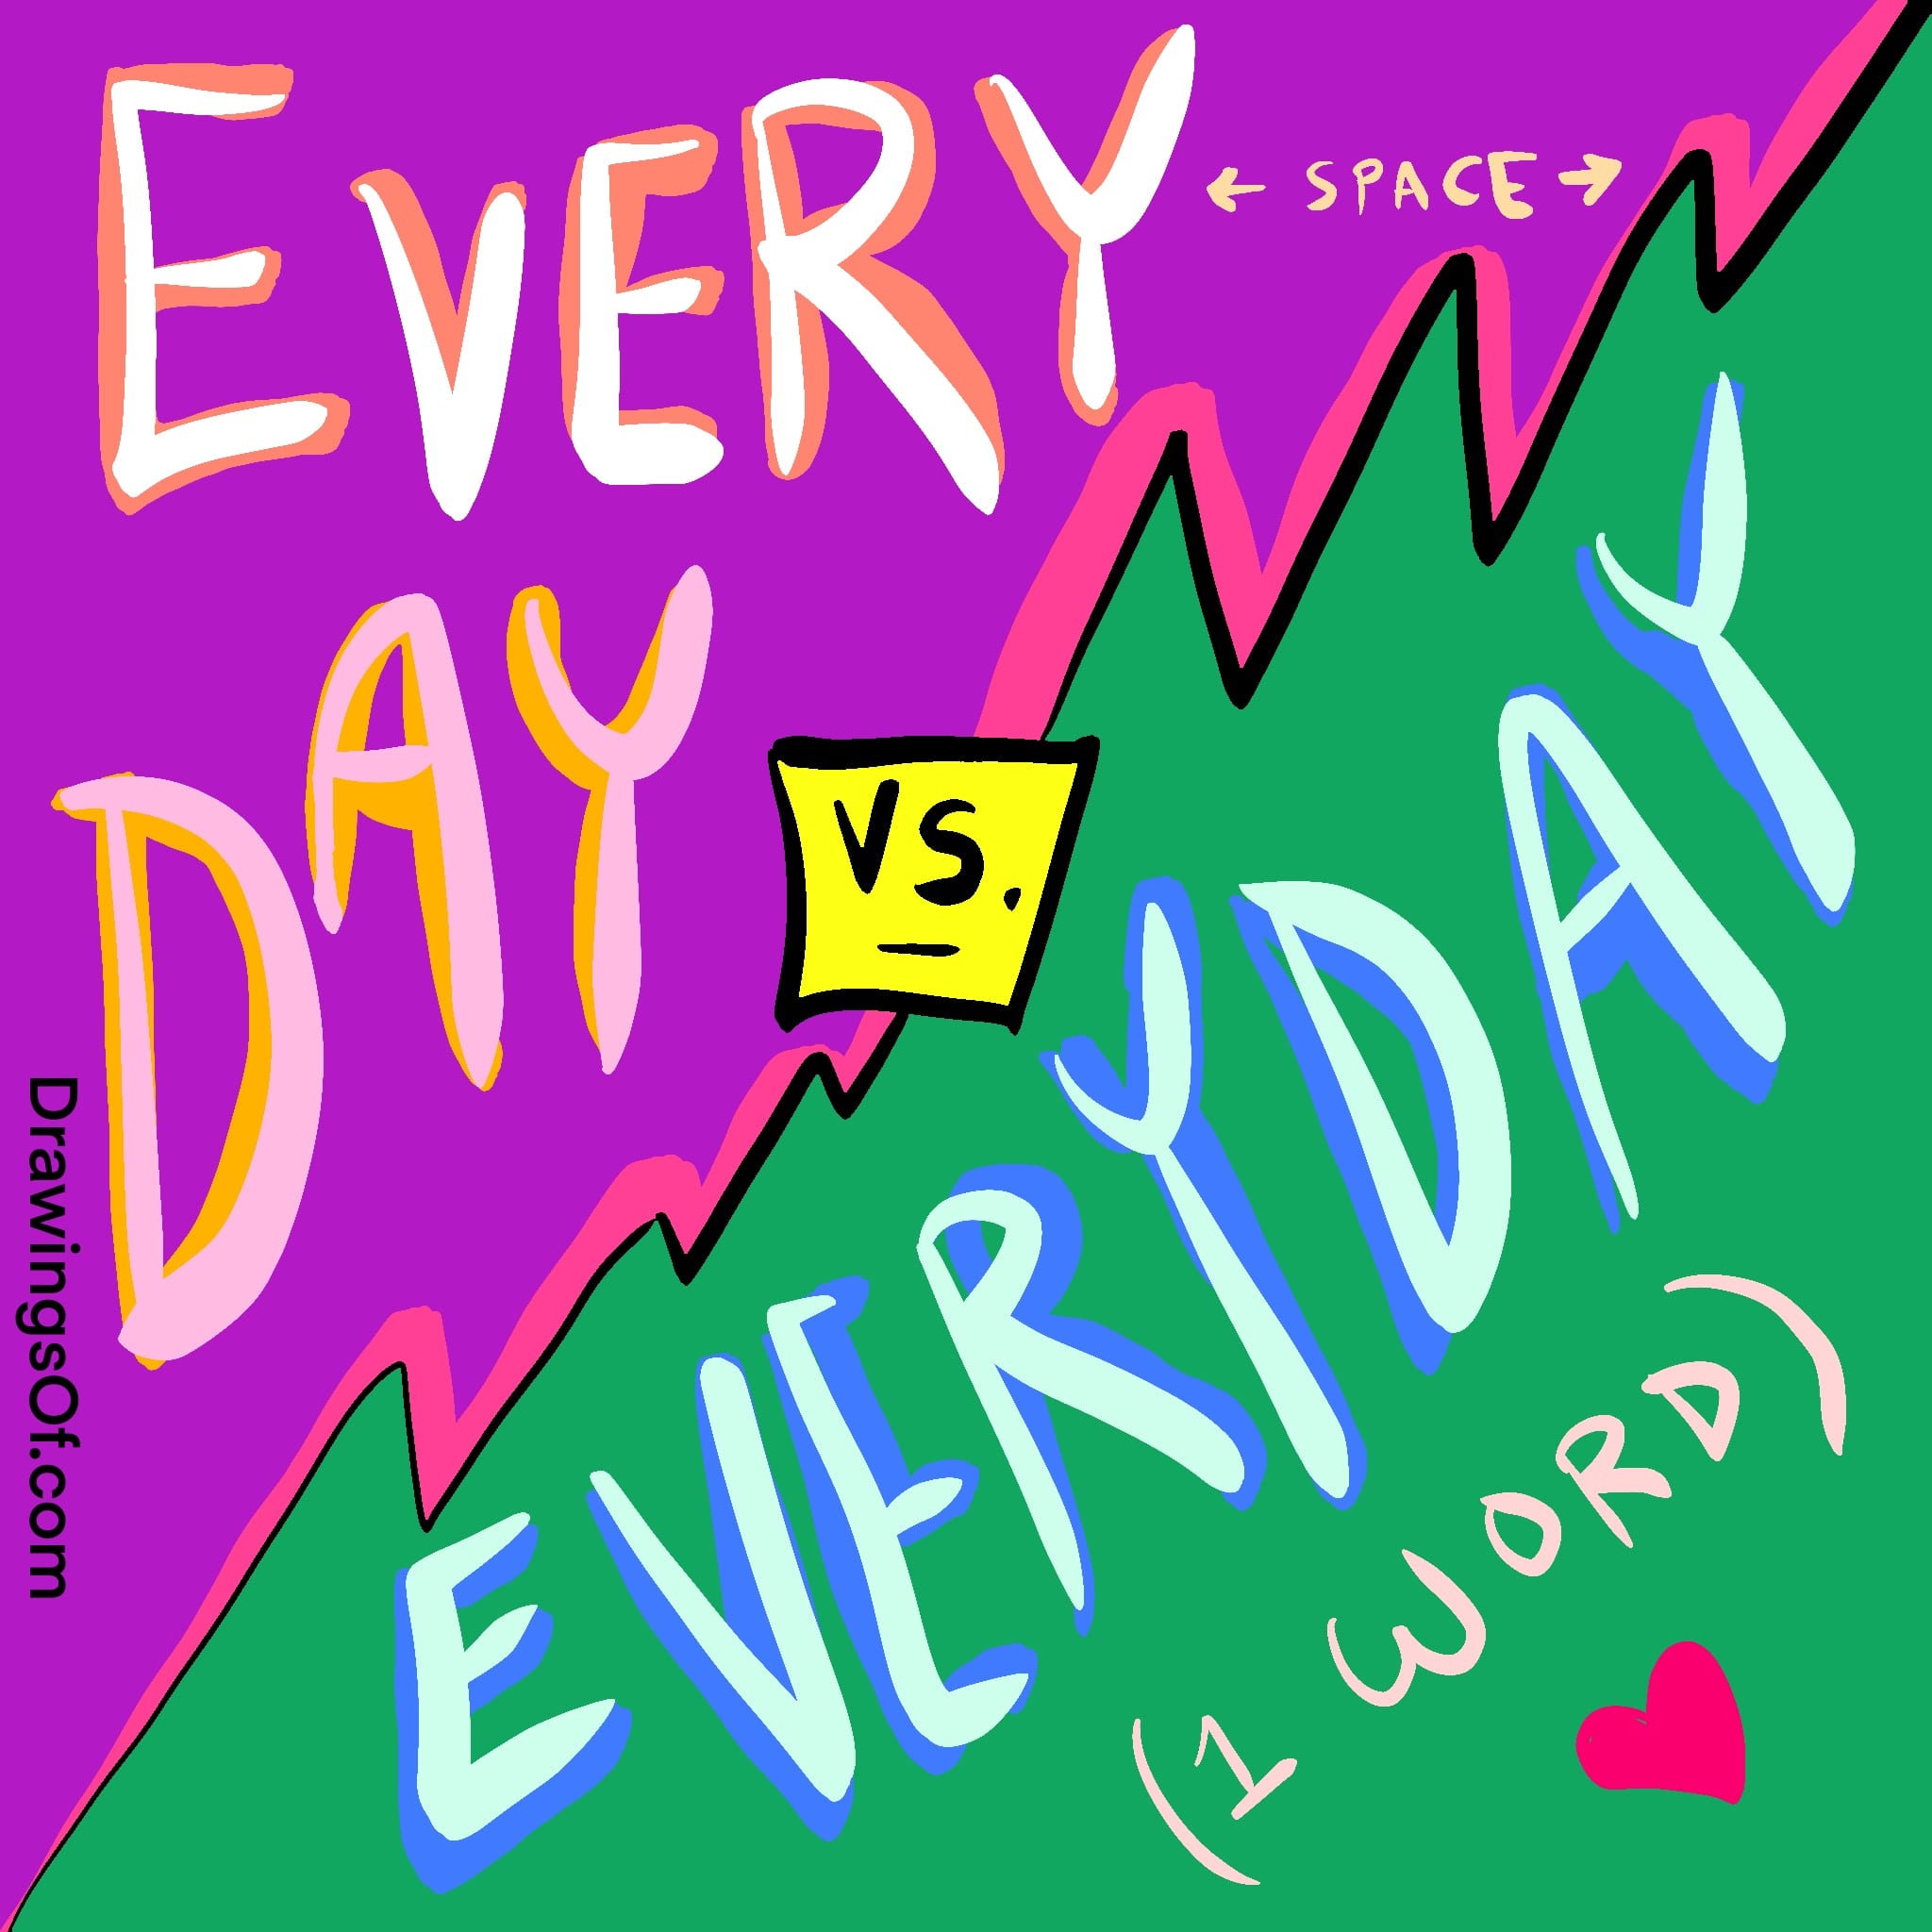 Everyday vs. Every Day